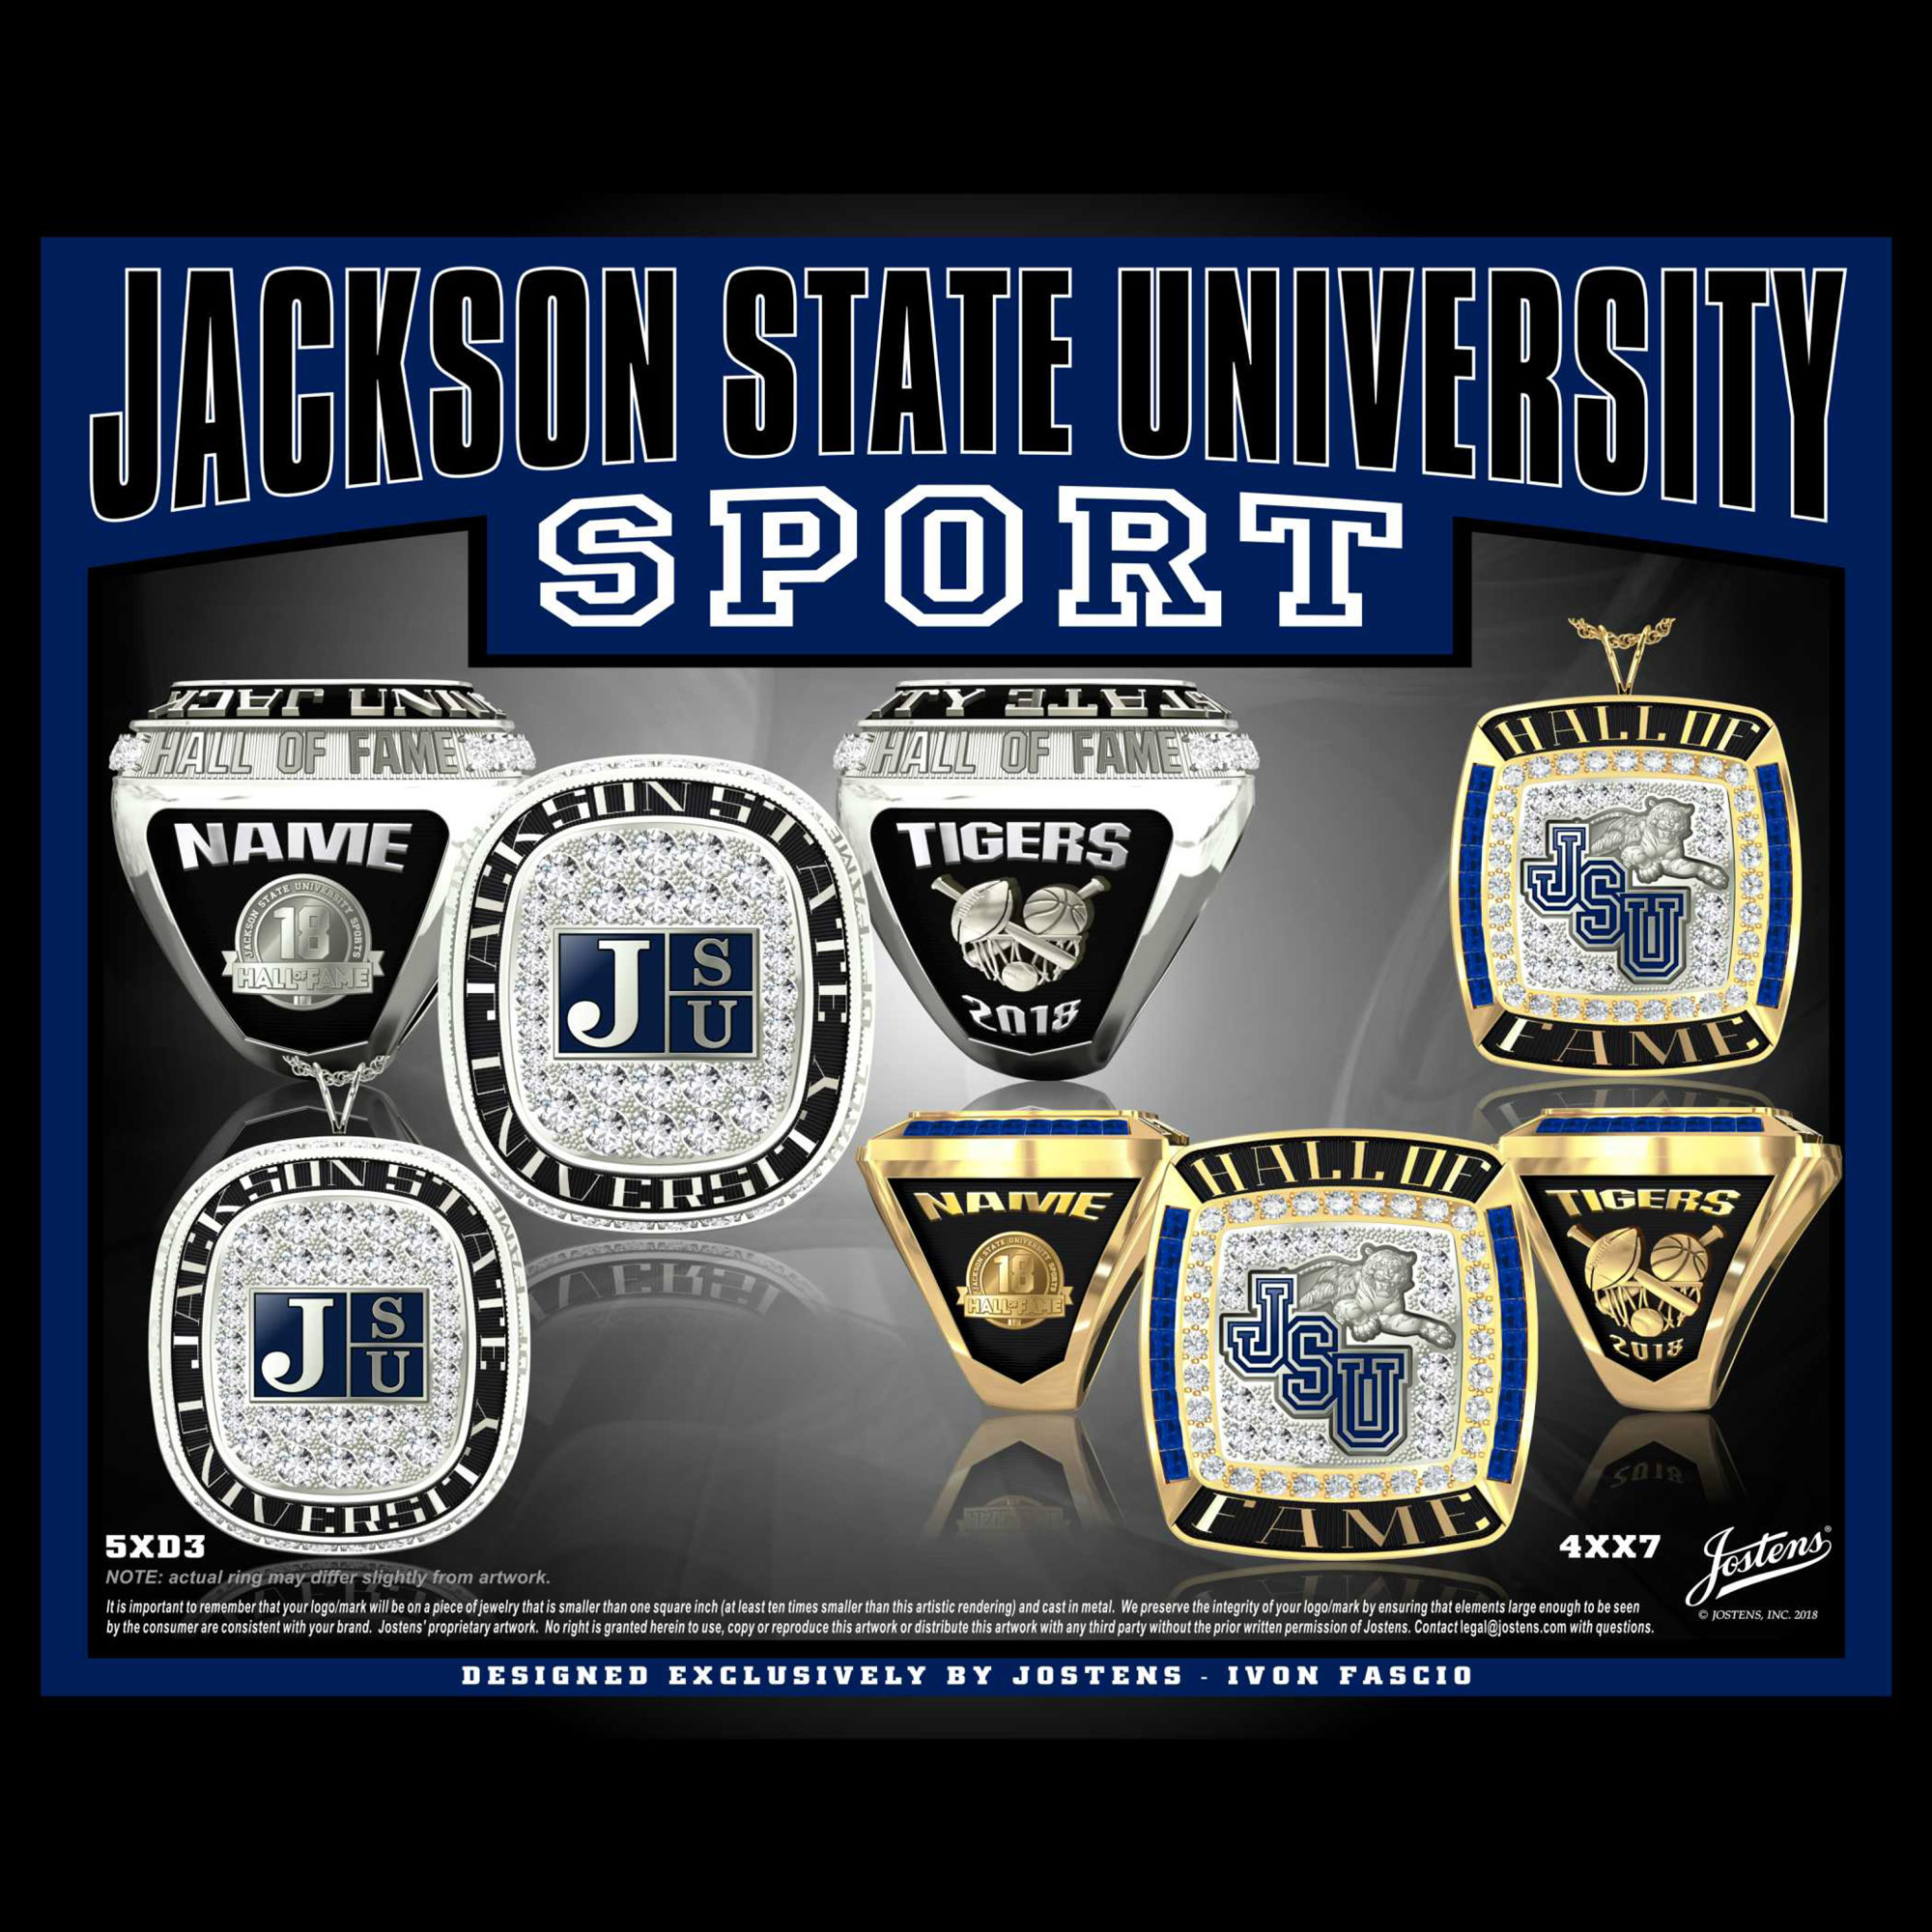 Jackson State University Hall of Fame Championship Ring